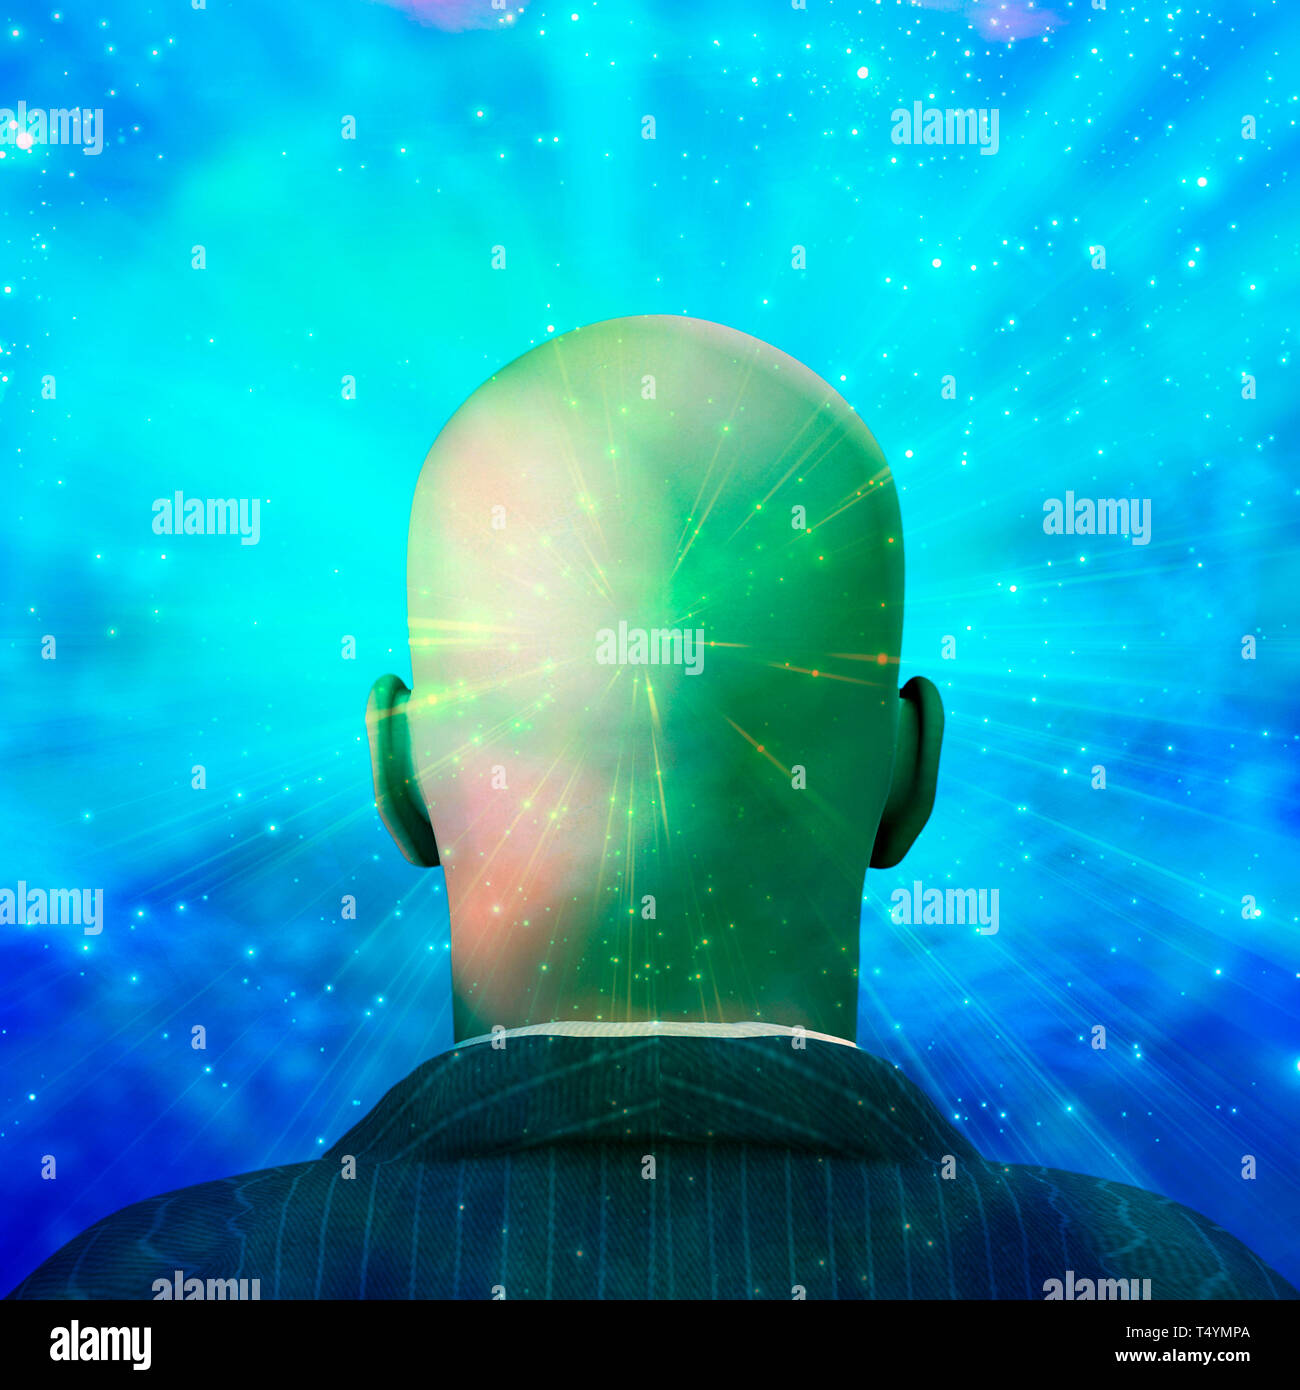 Bald man in suit, Shining light Stock Photo